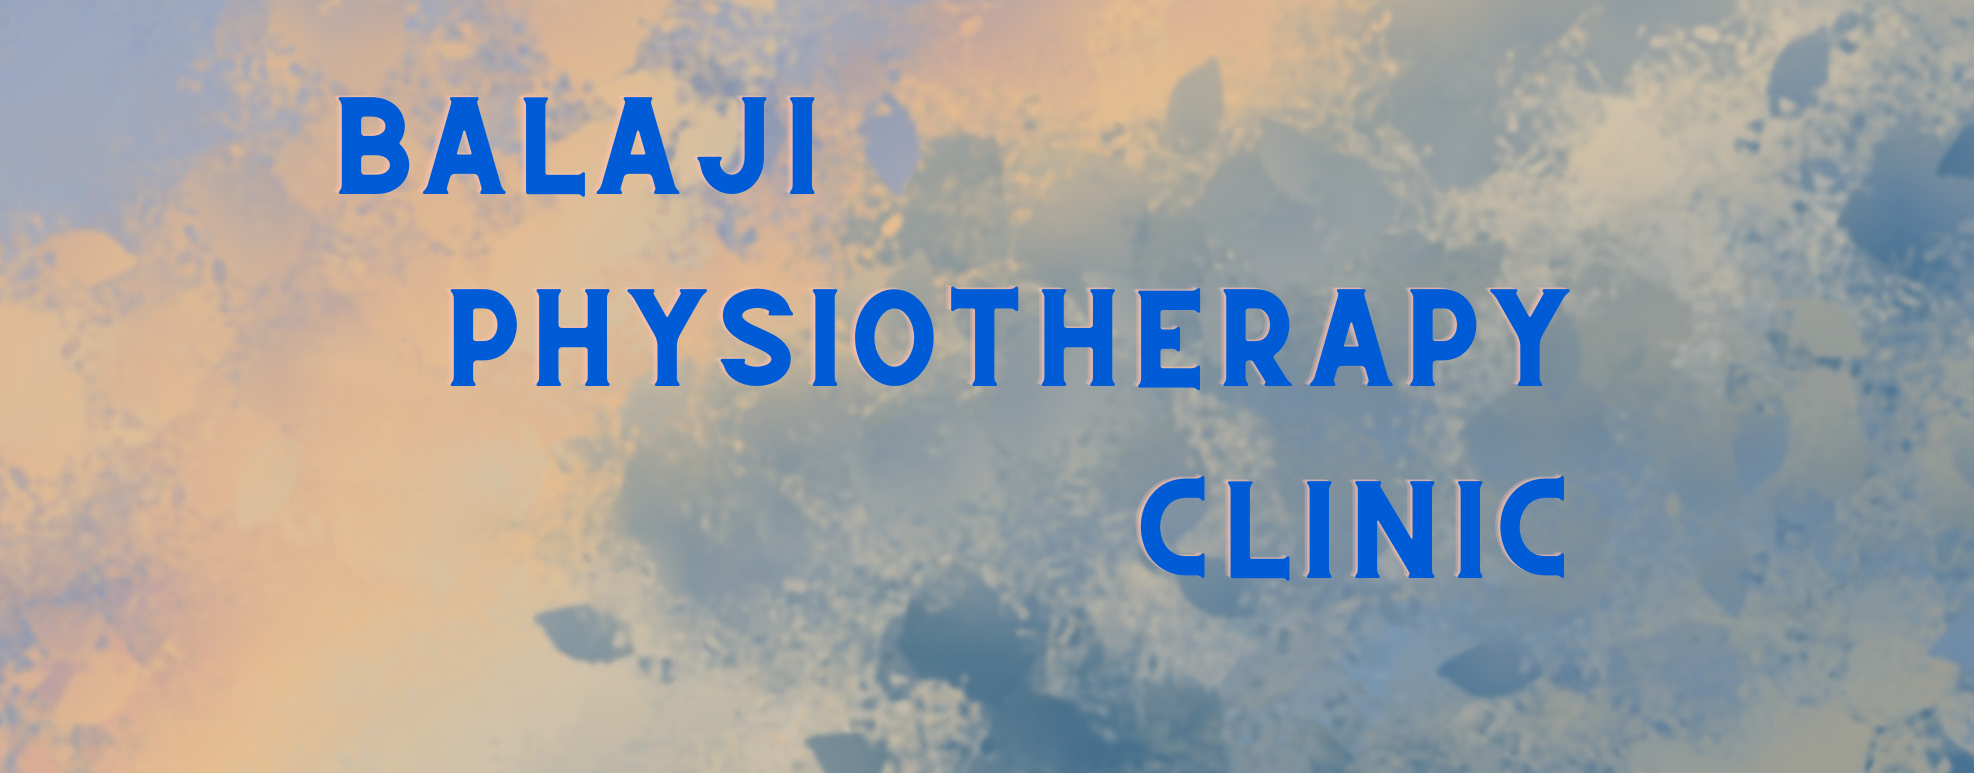  Balaji Physiotherapy Clinic